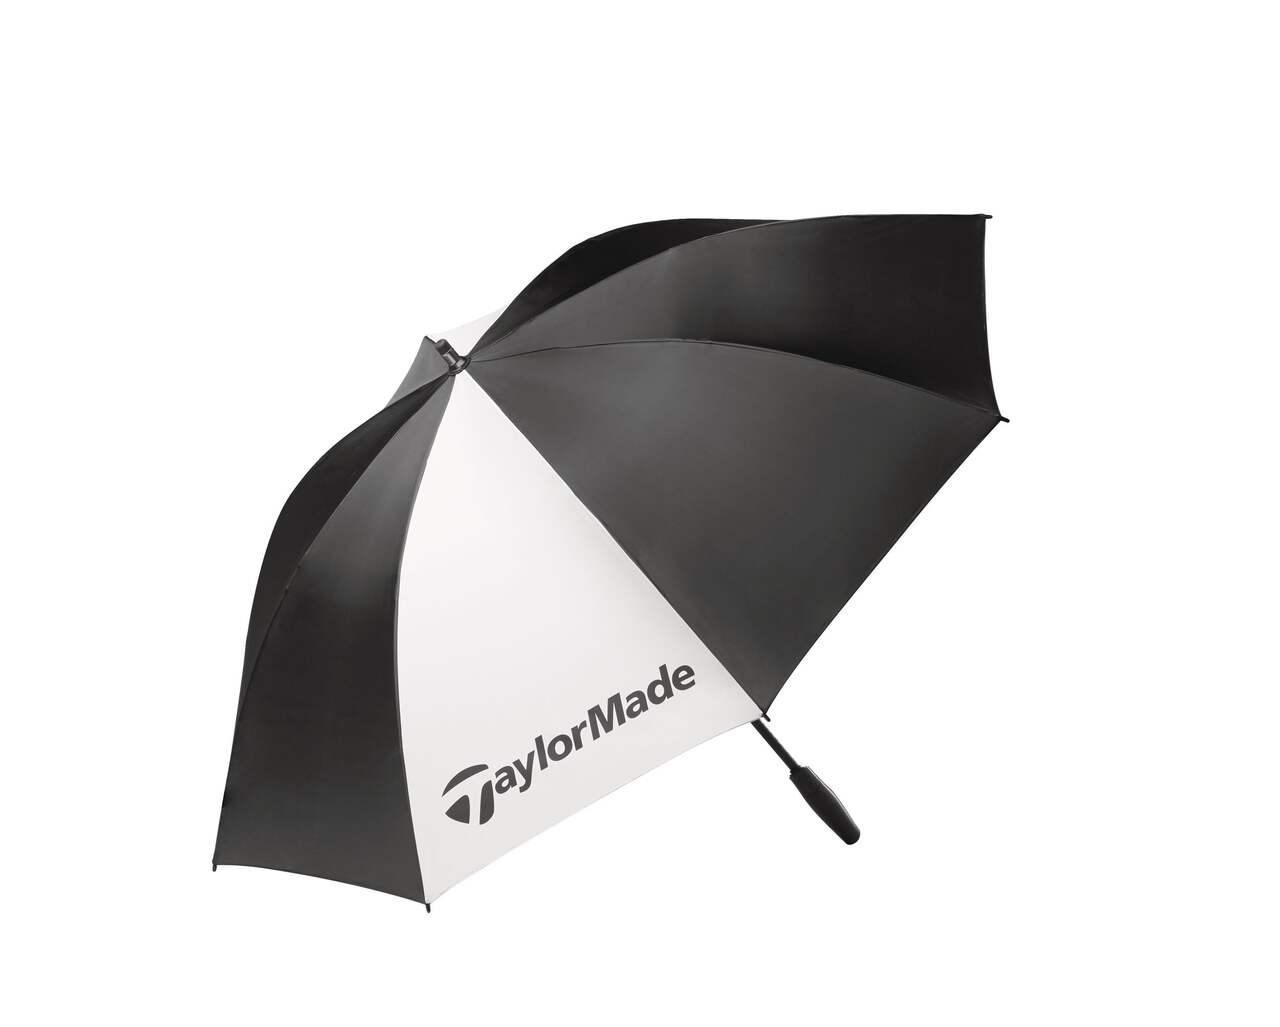 TaylorMade 68-inch Auto Open Vented Golf Umbrella, Black/White